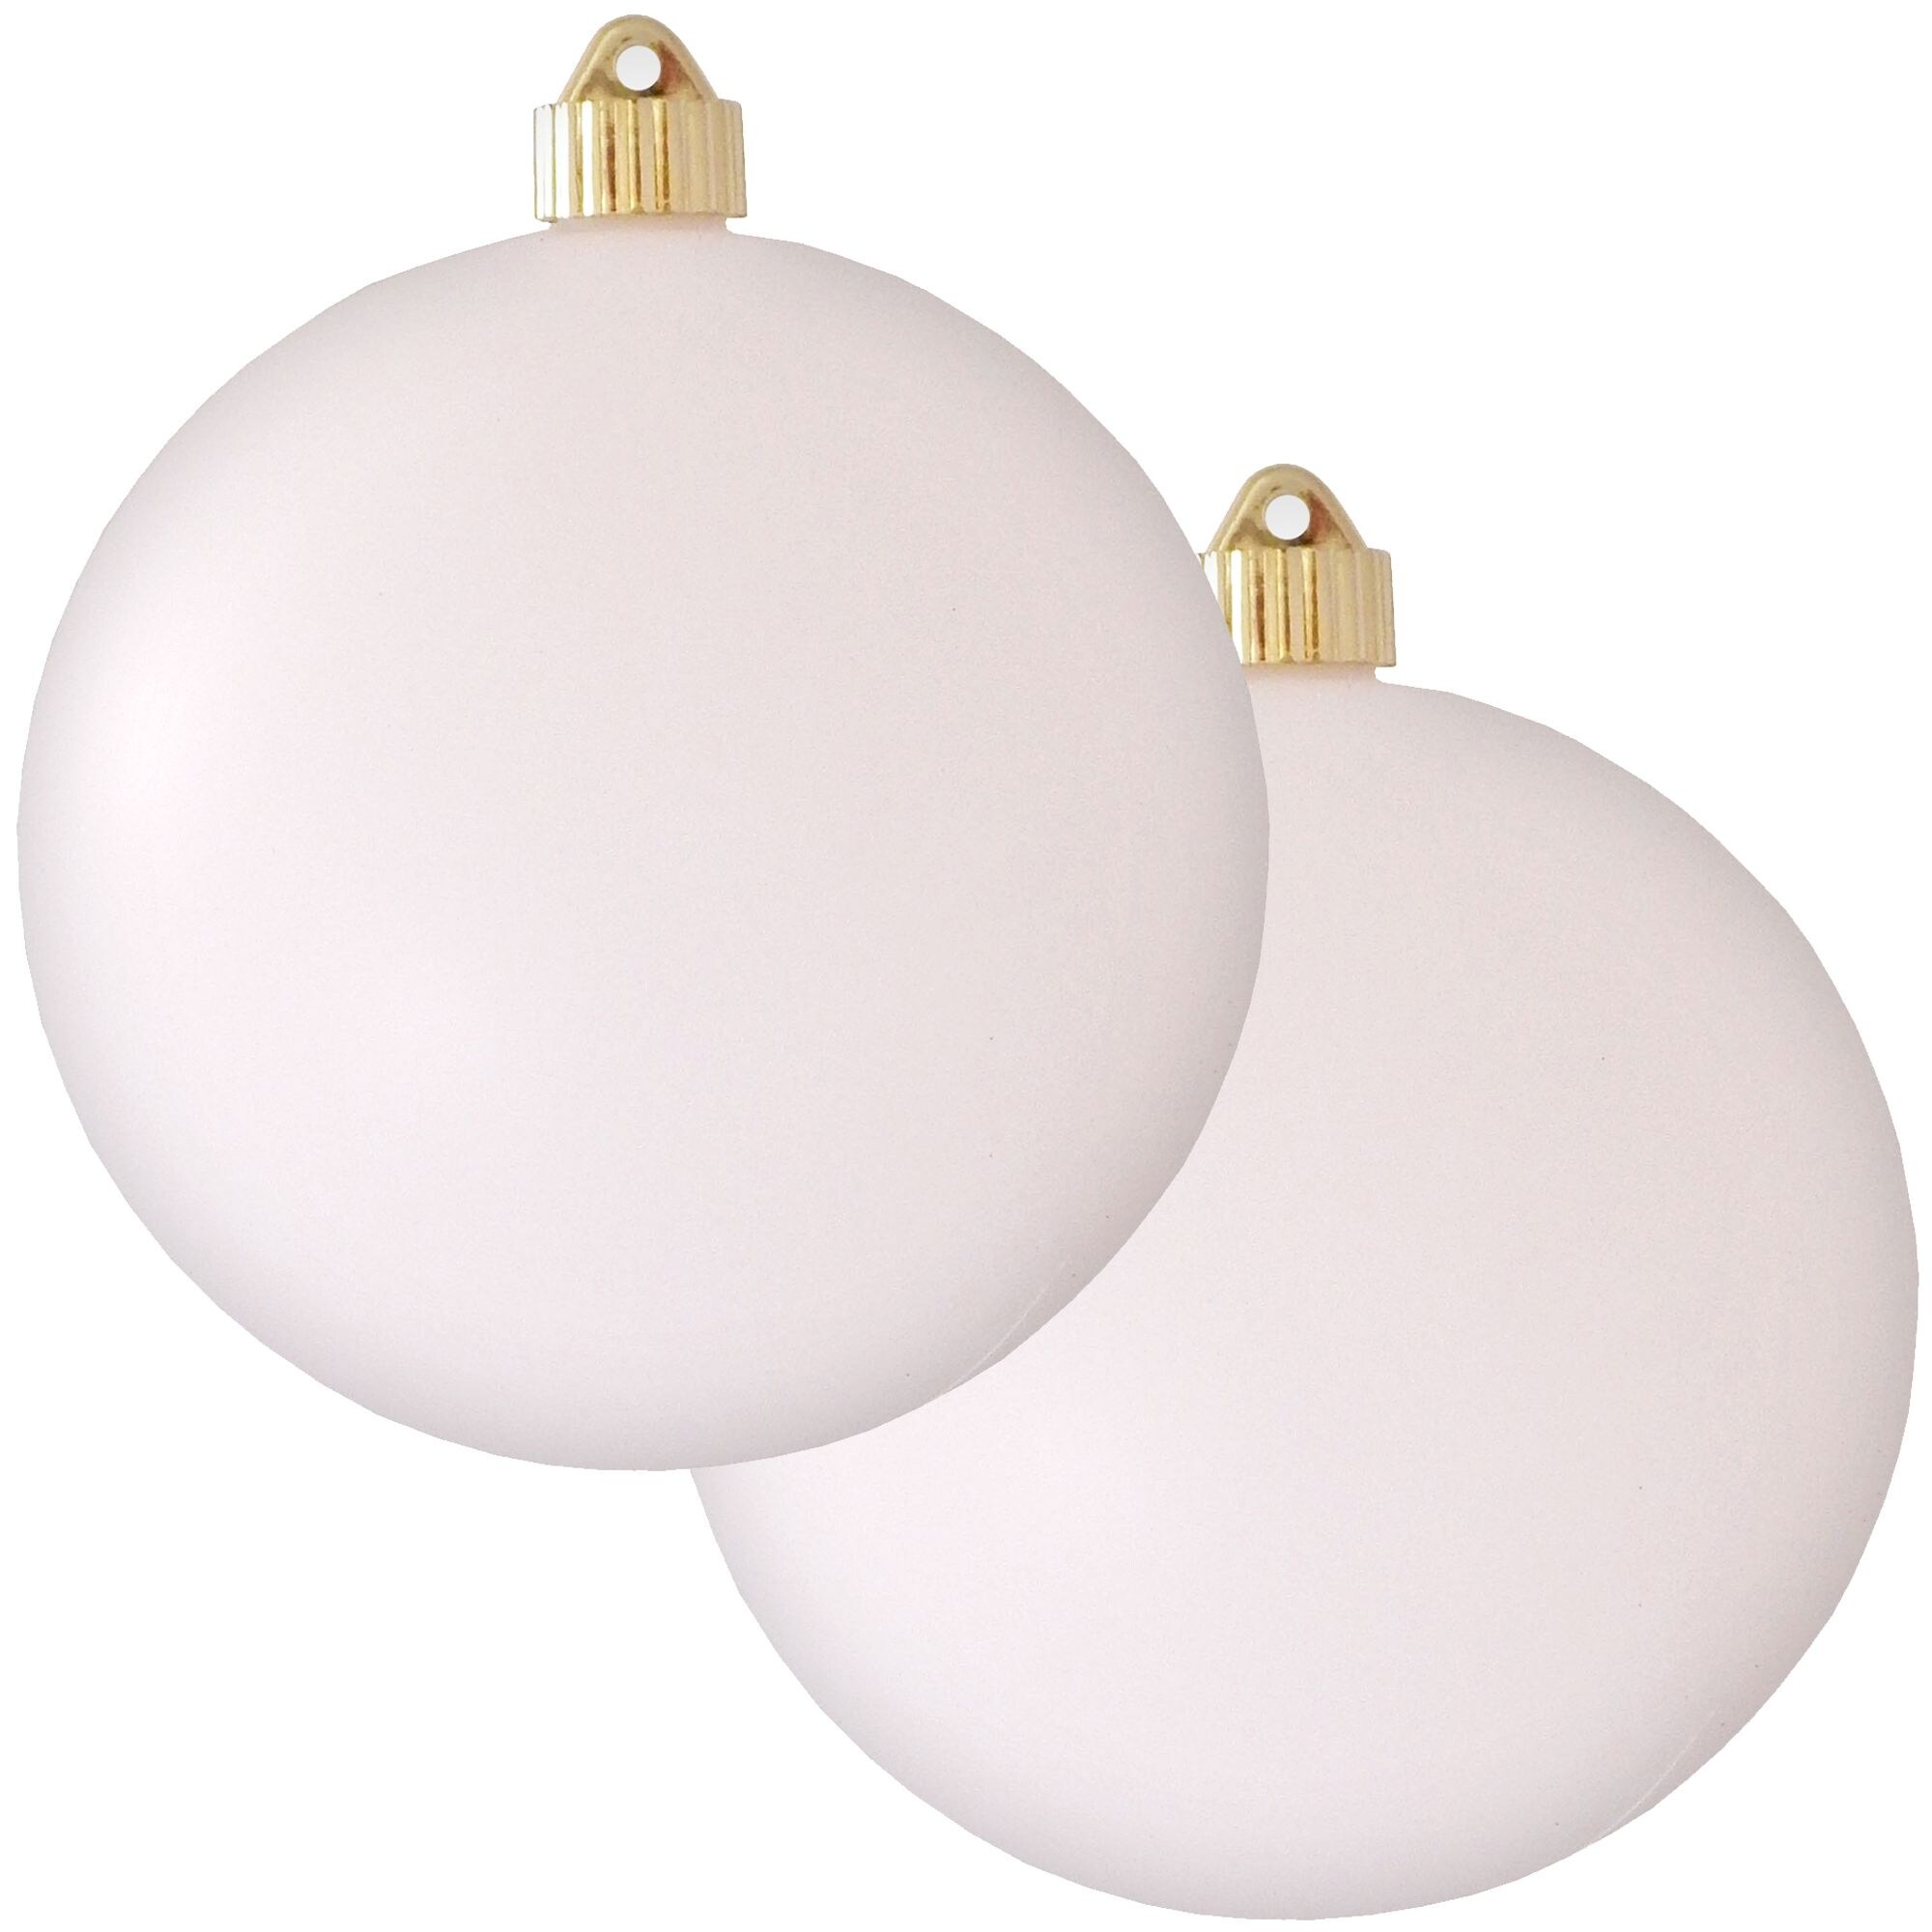 24-Piece Black Shatterproof Christmas Ornaments Set - Gift Ornaments -  Hallmark